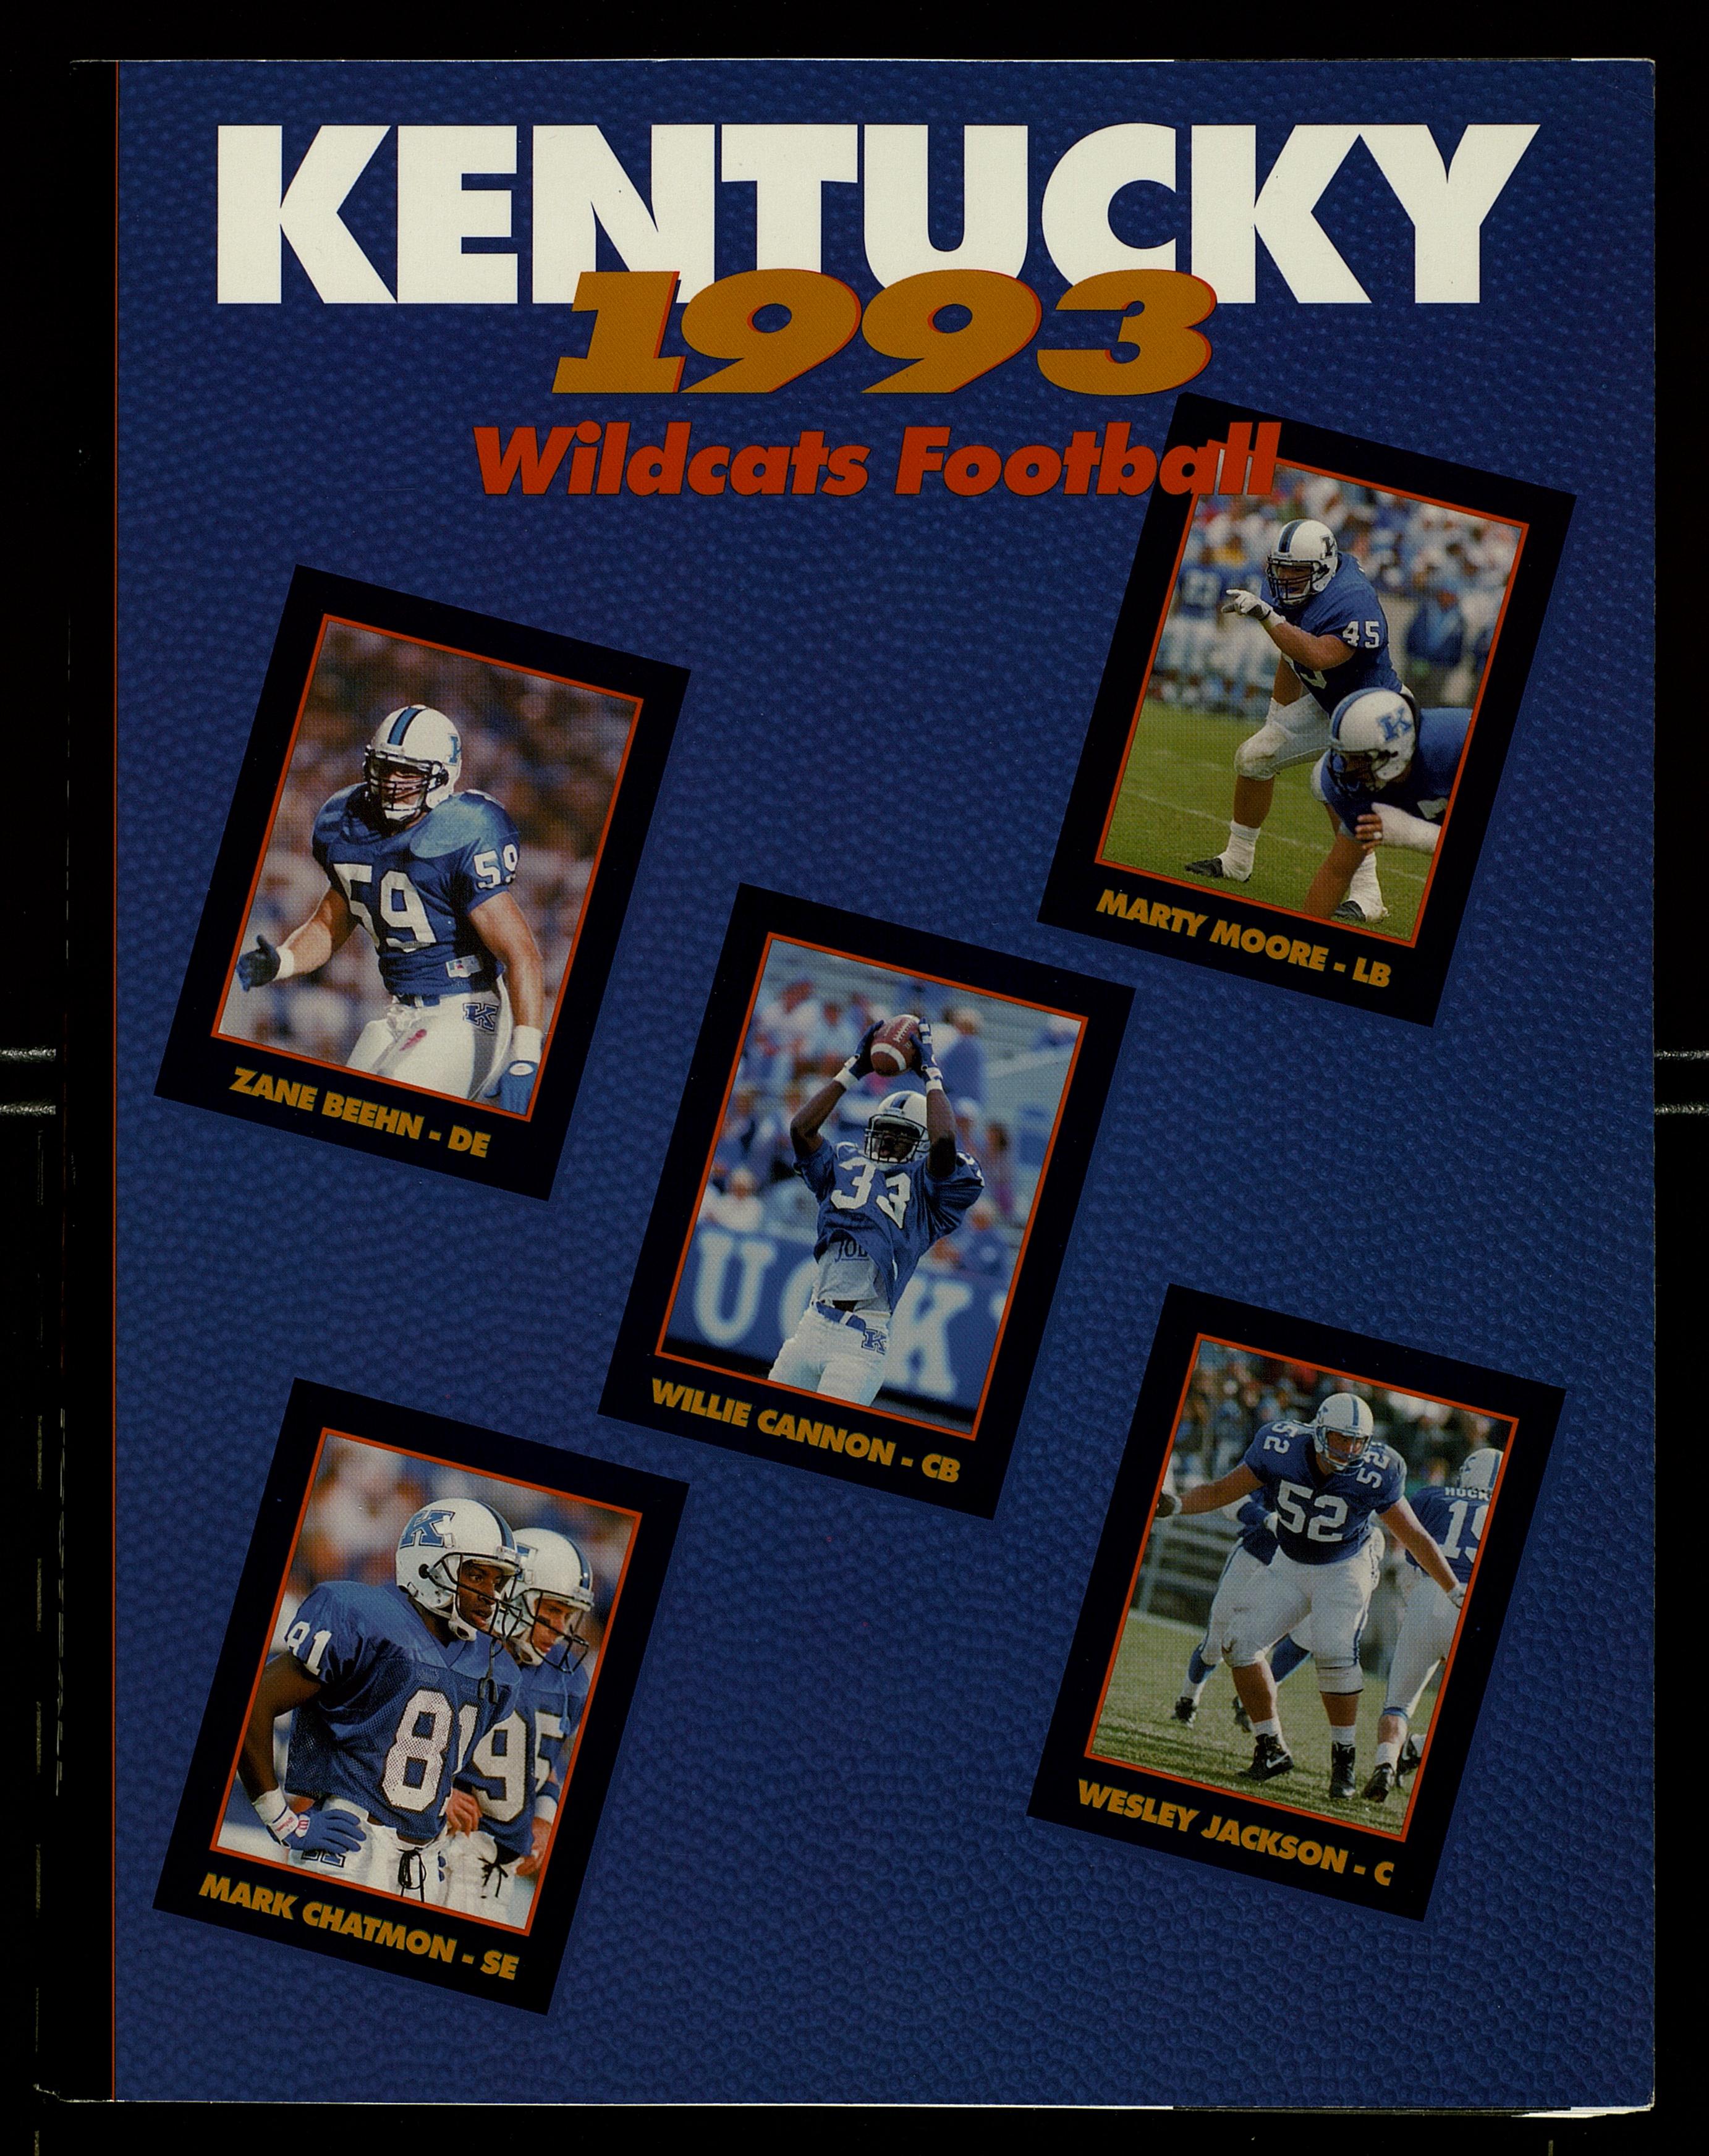 University of Kentucky Football Media Guide, 1993 image